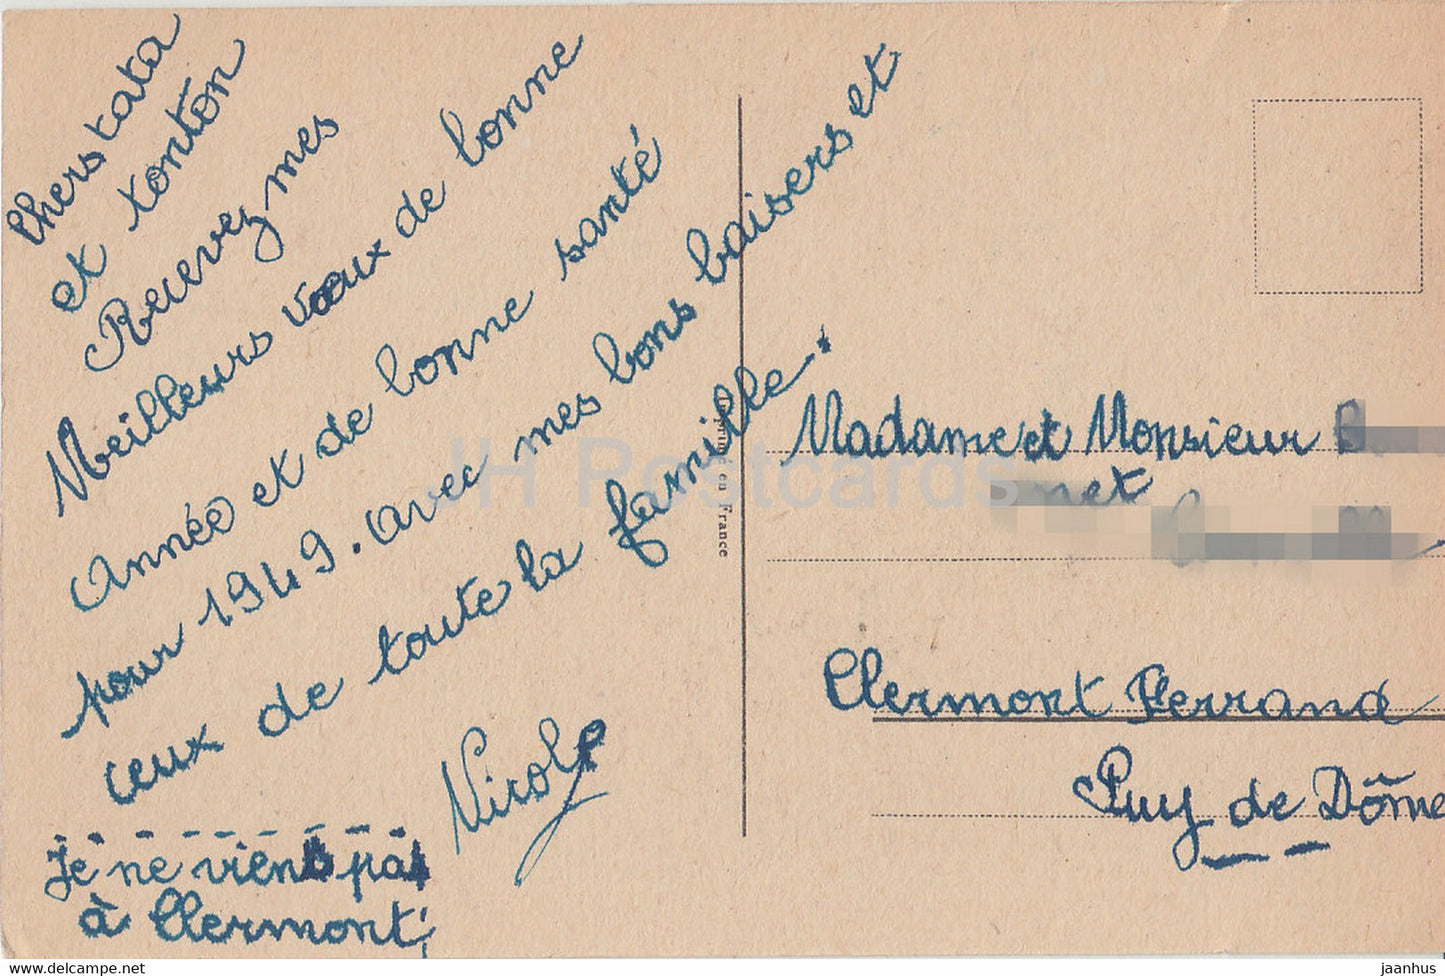 New Year Greeting Card - Bonne et Heureuse Fete - flowers - roses - illustration - old postcard - France - used